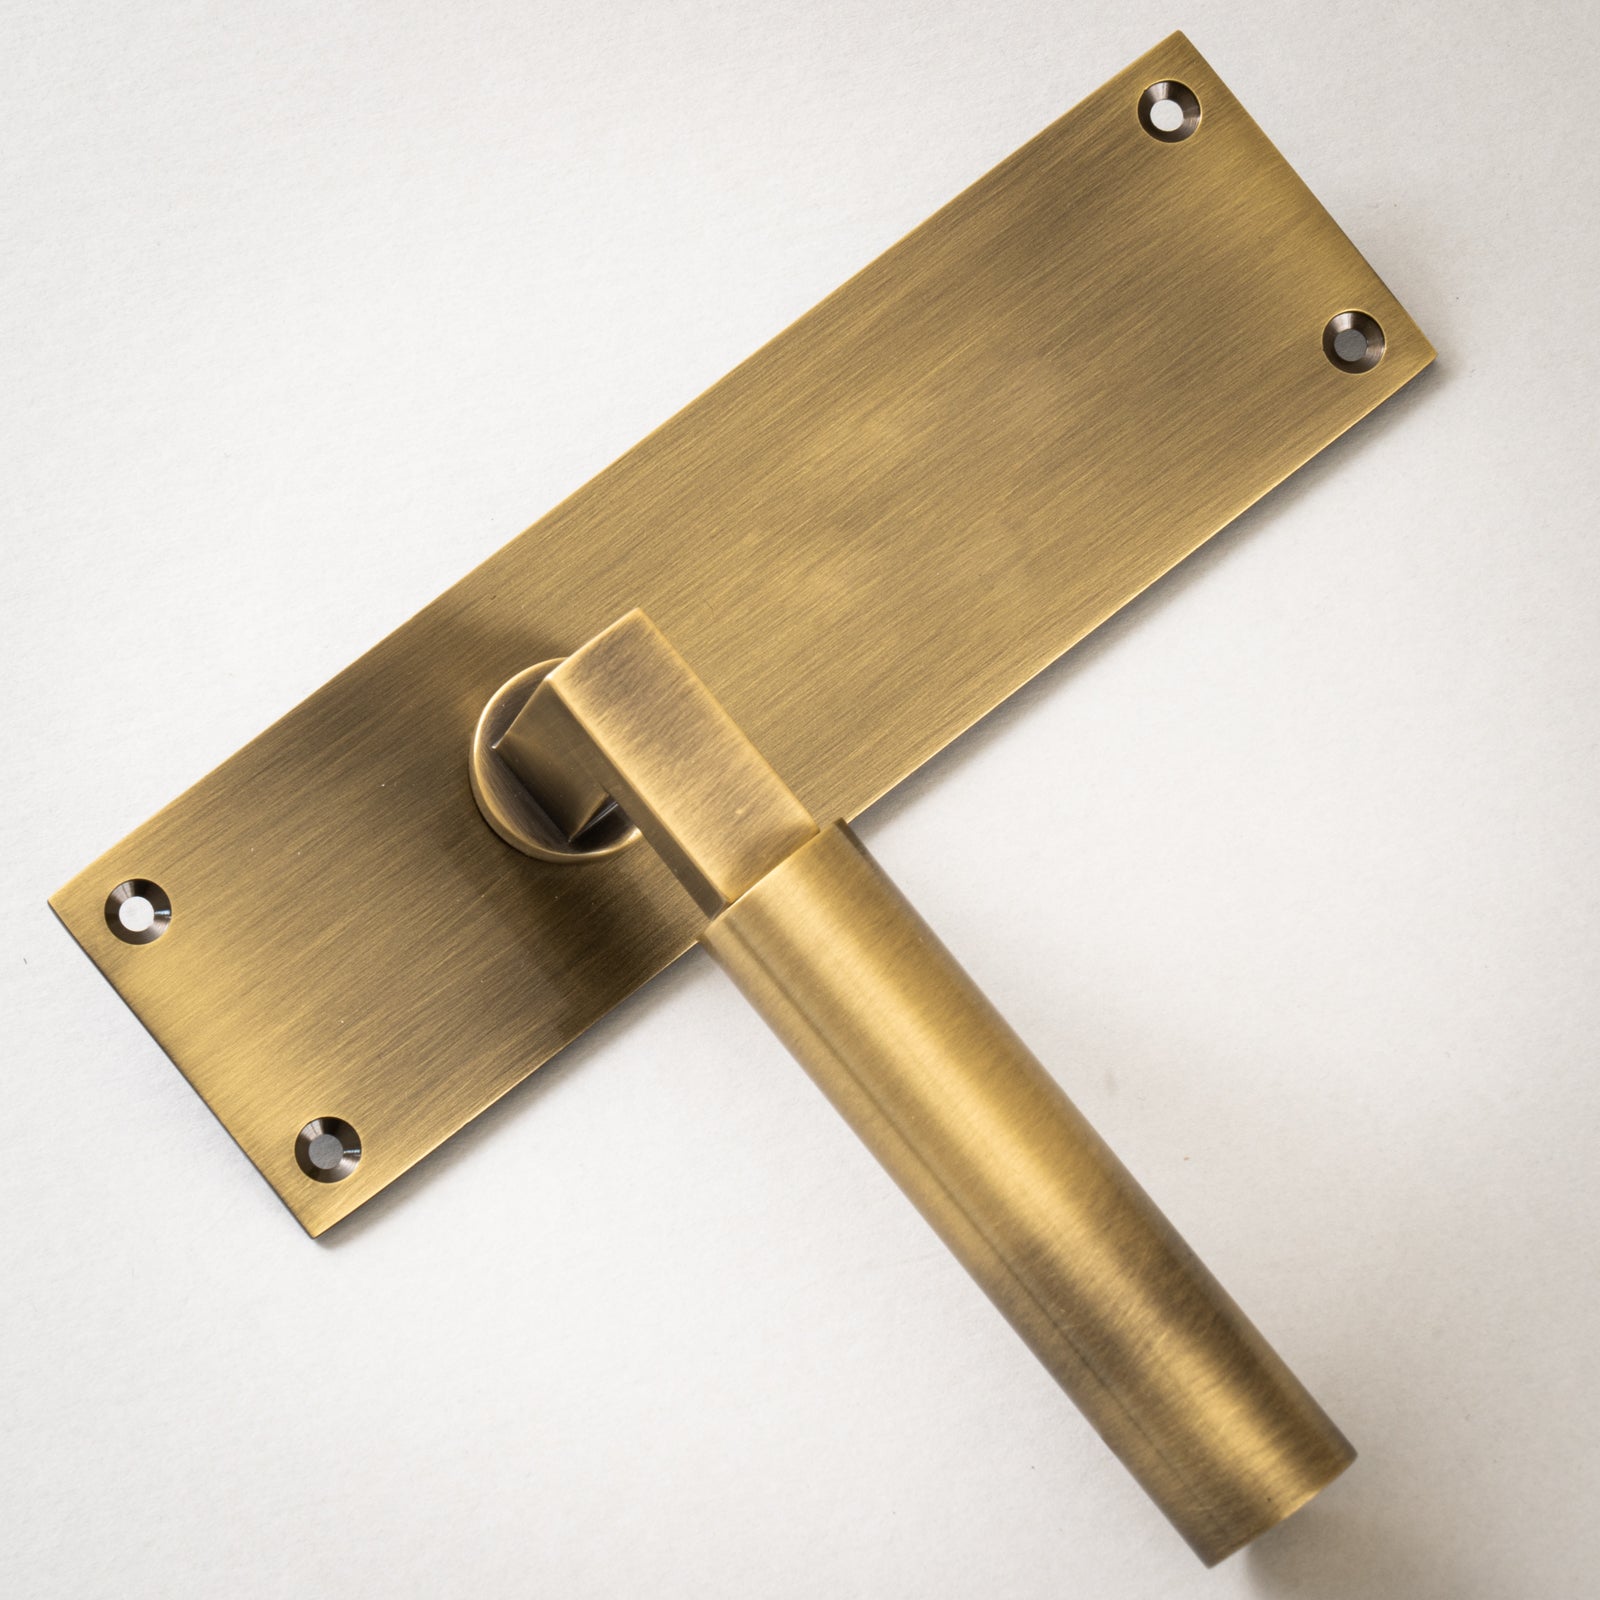 Bauhaus Door Handles On Plate Latch Handle in Aged Brass SHOW